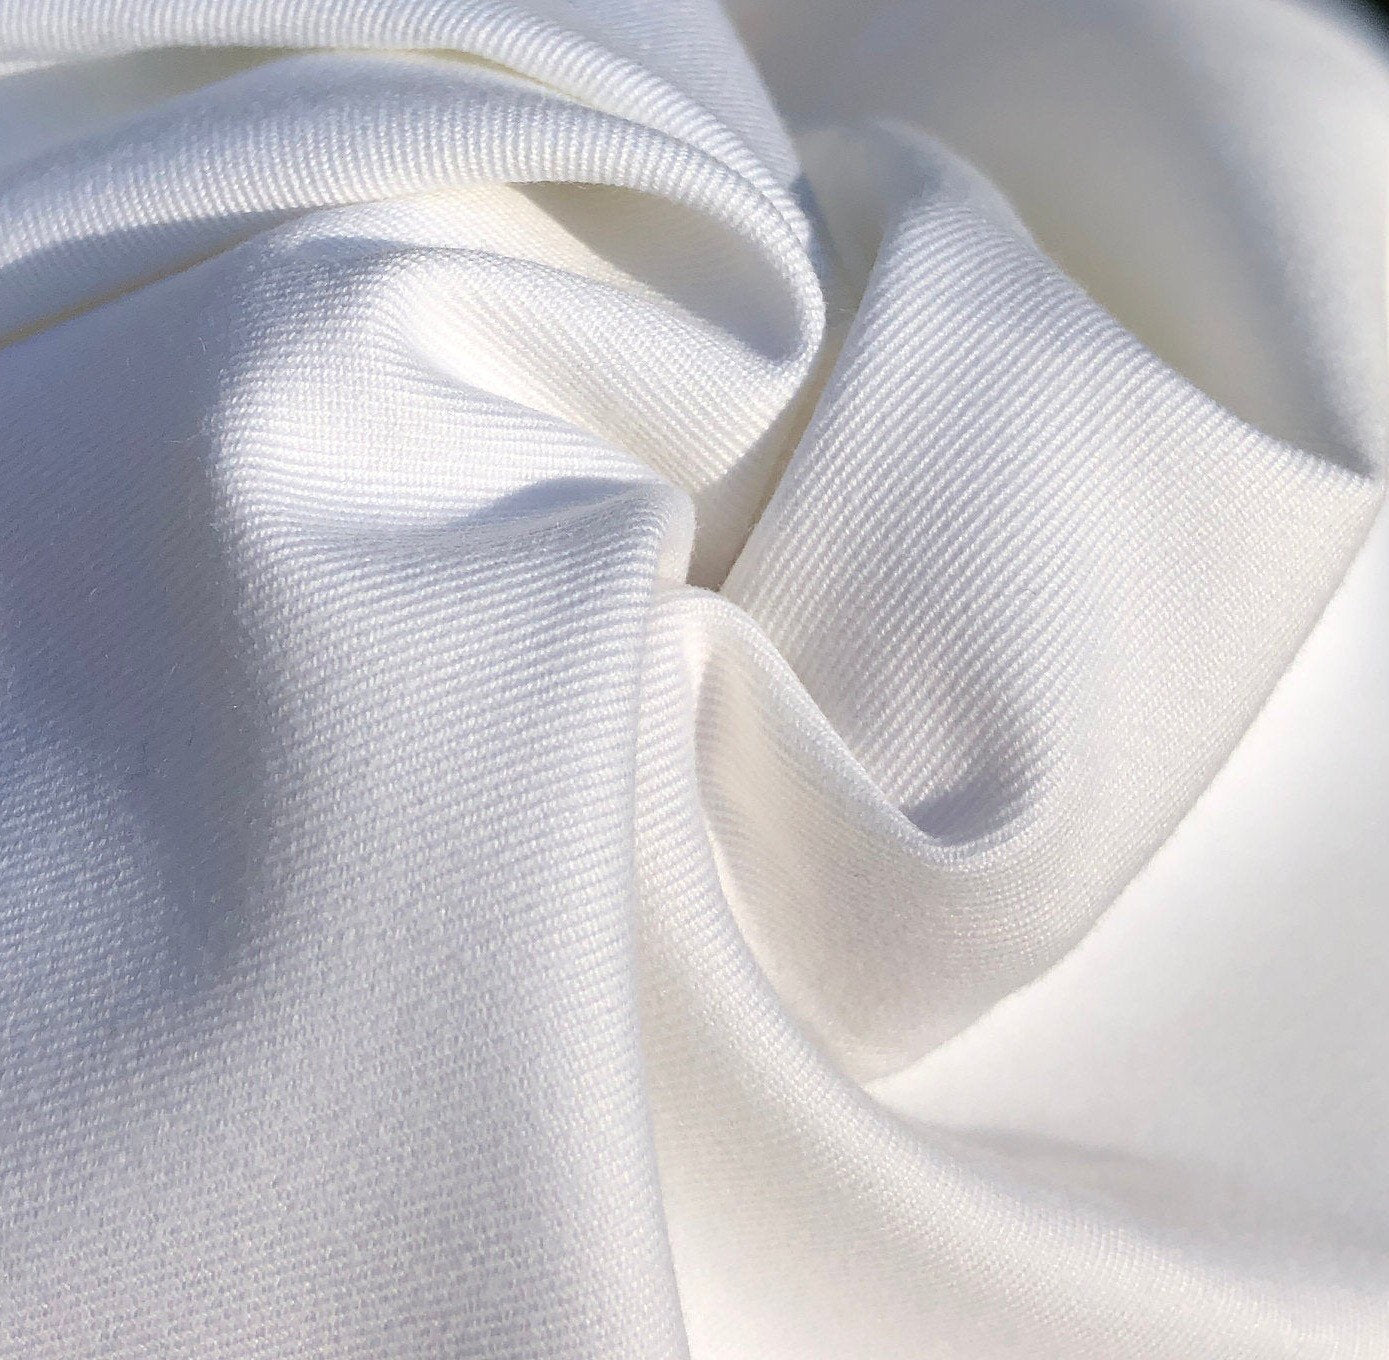  Grey 100% Cotton Twill Fabric by The Yard(36 Inch